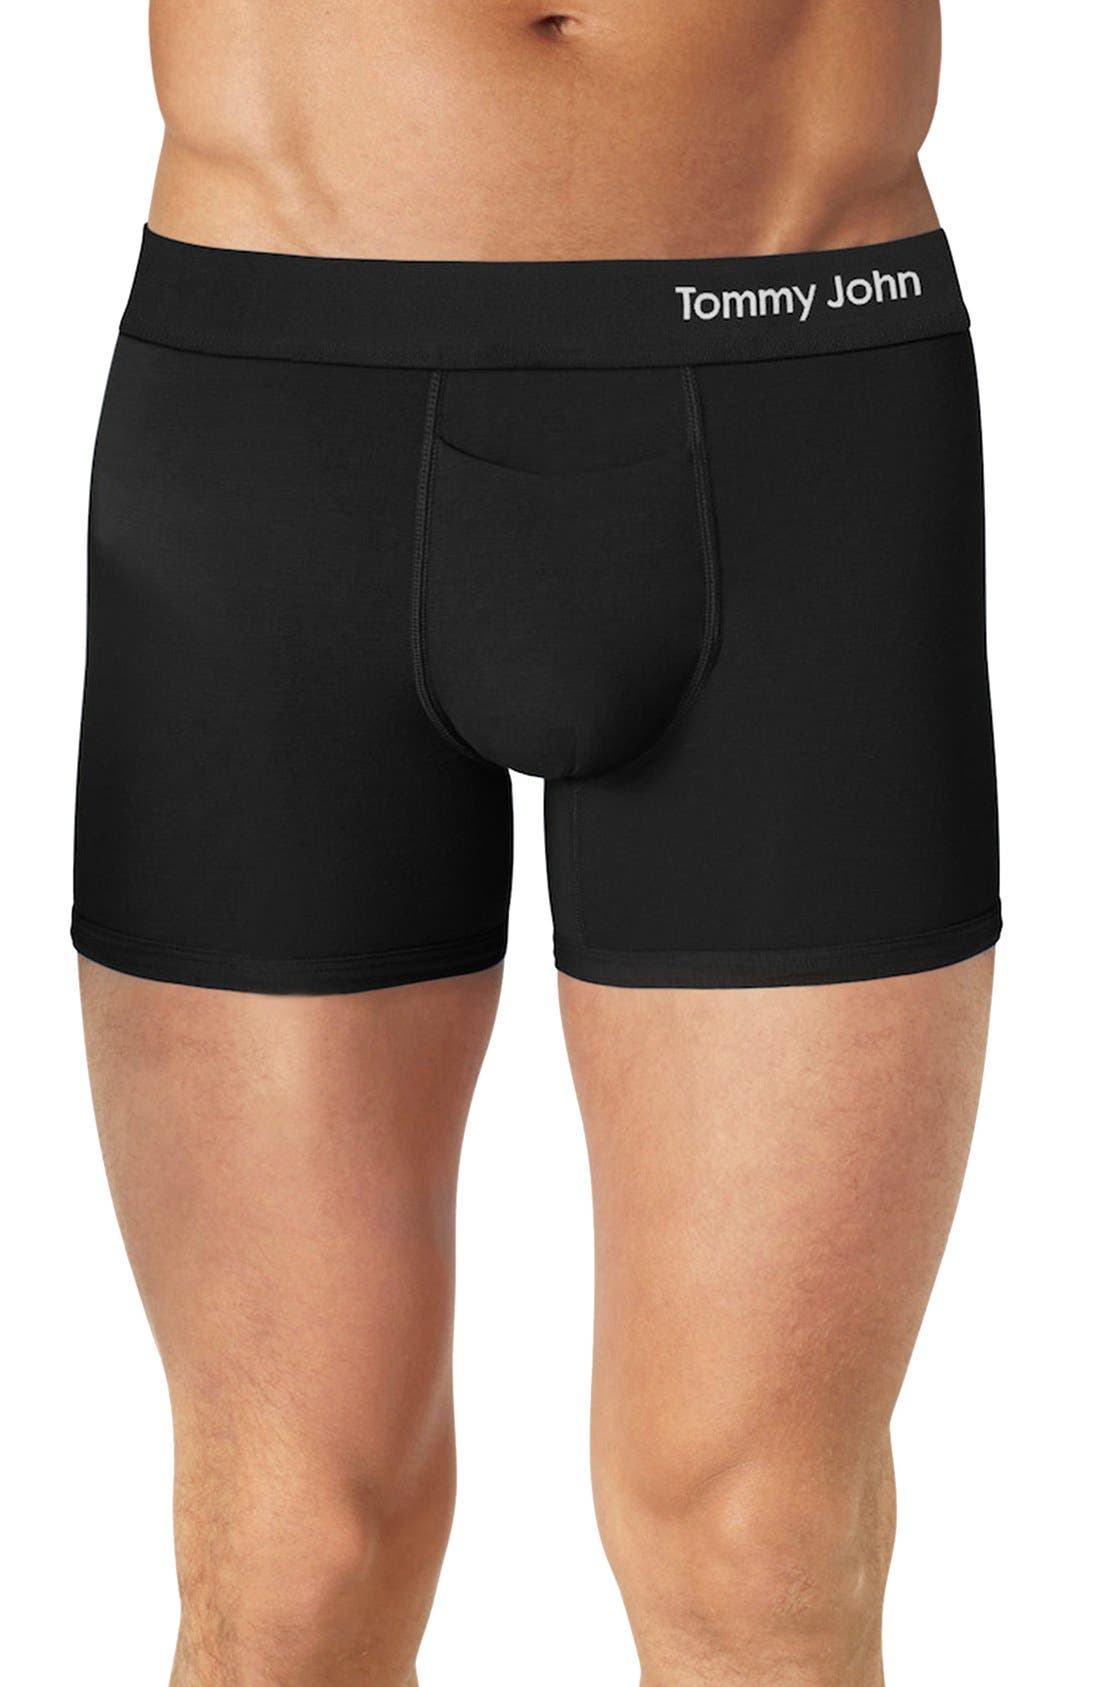 tommy john air underwear